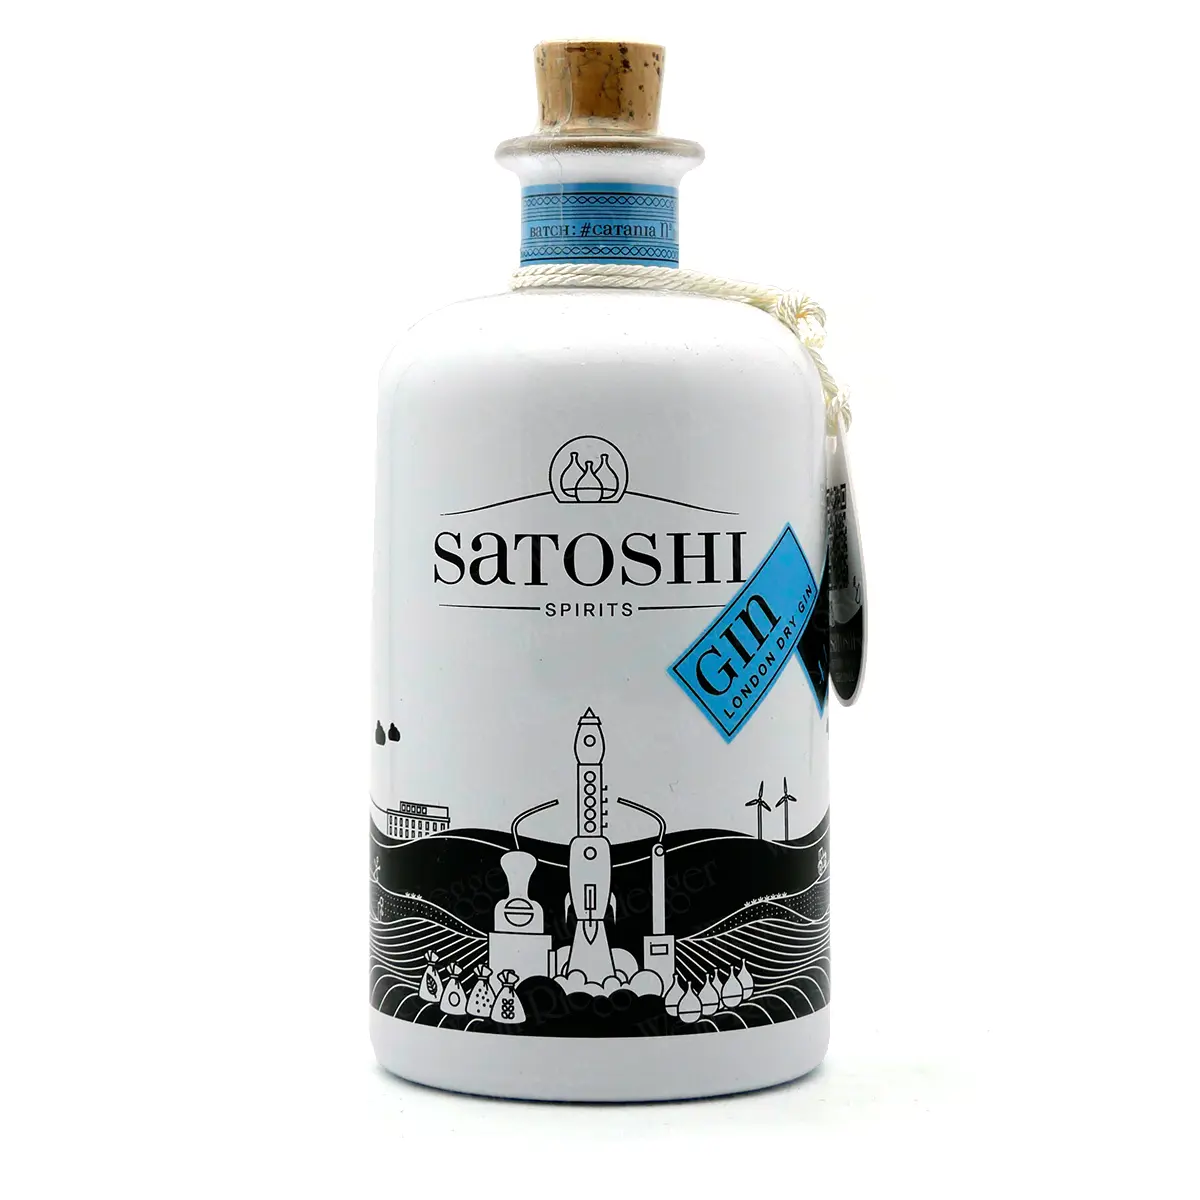 SATOSHI London Dry Gin